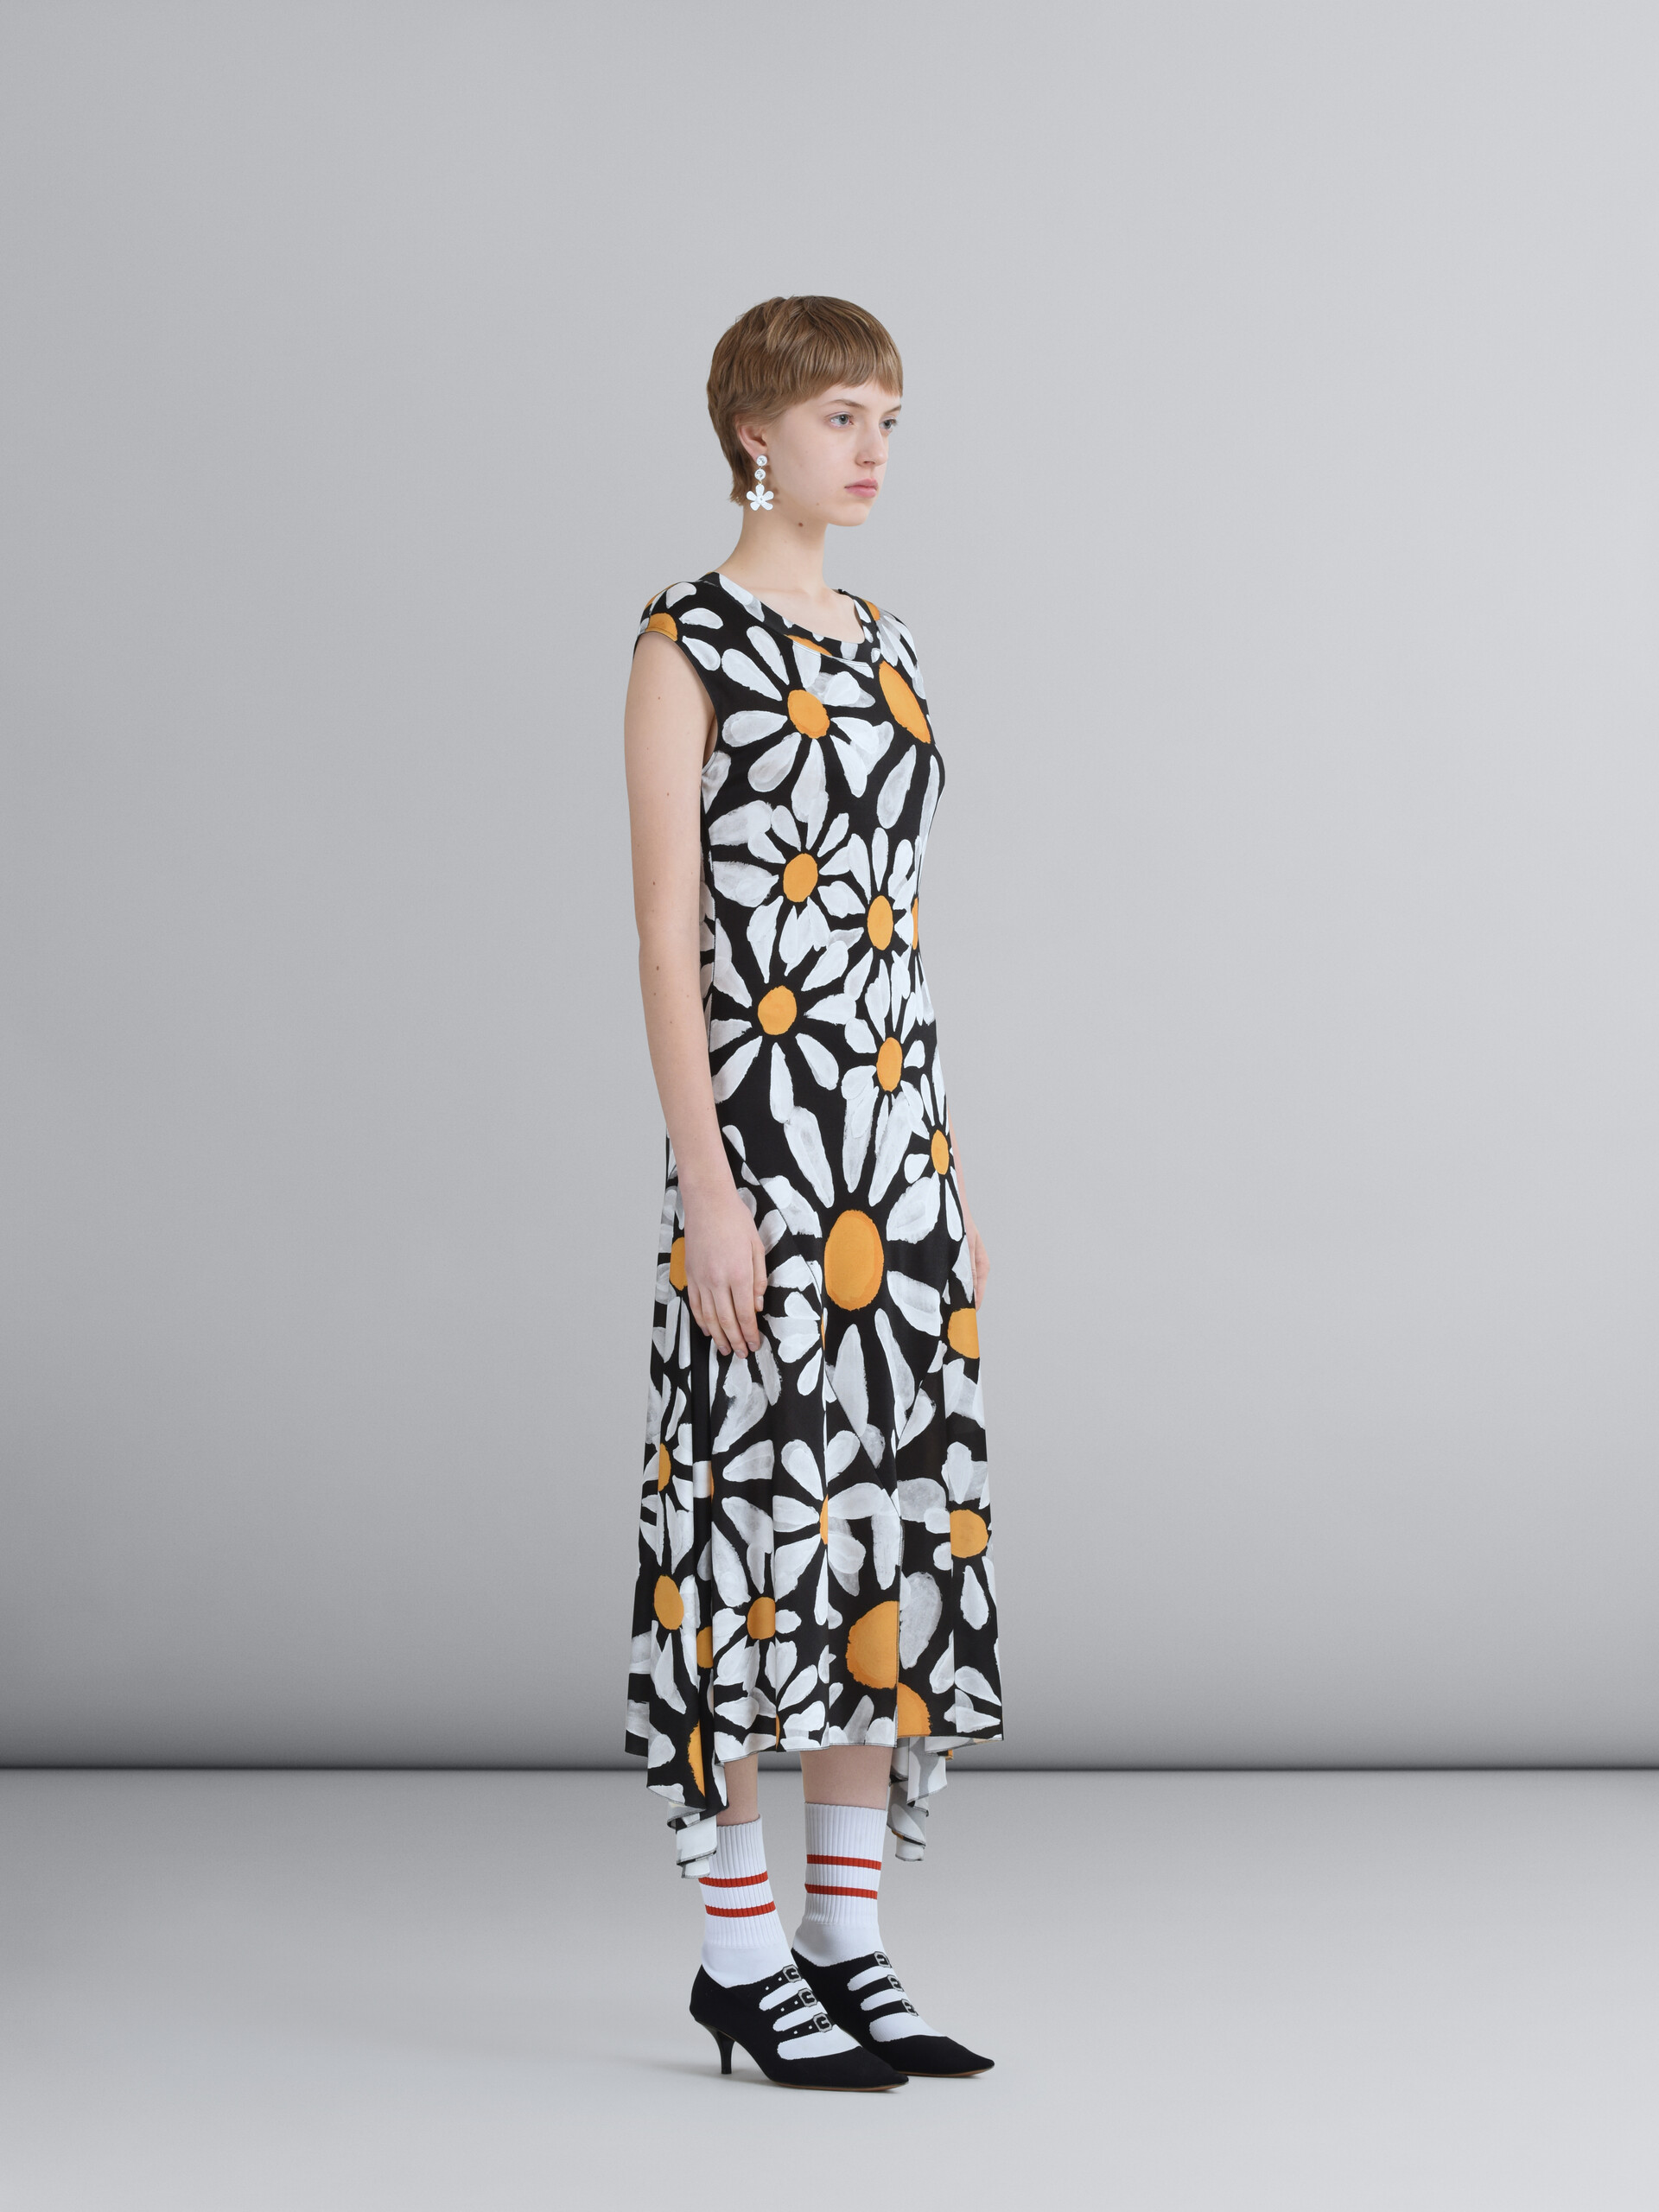 Euphoriaプリント ビスコースジャージー製ドレス - ドレス - Image 6